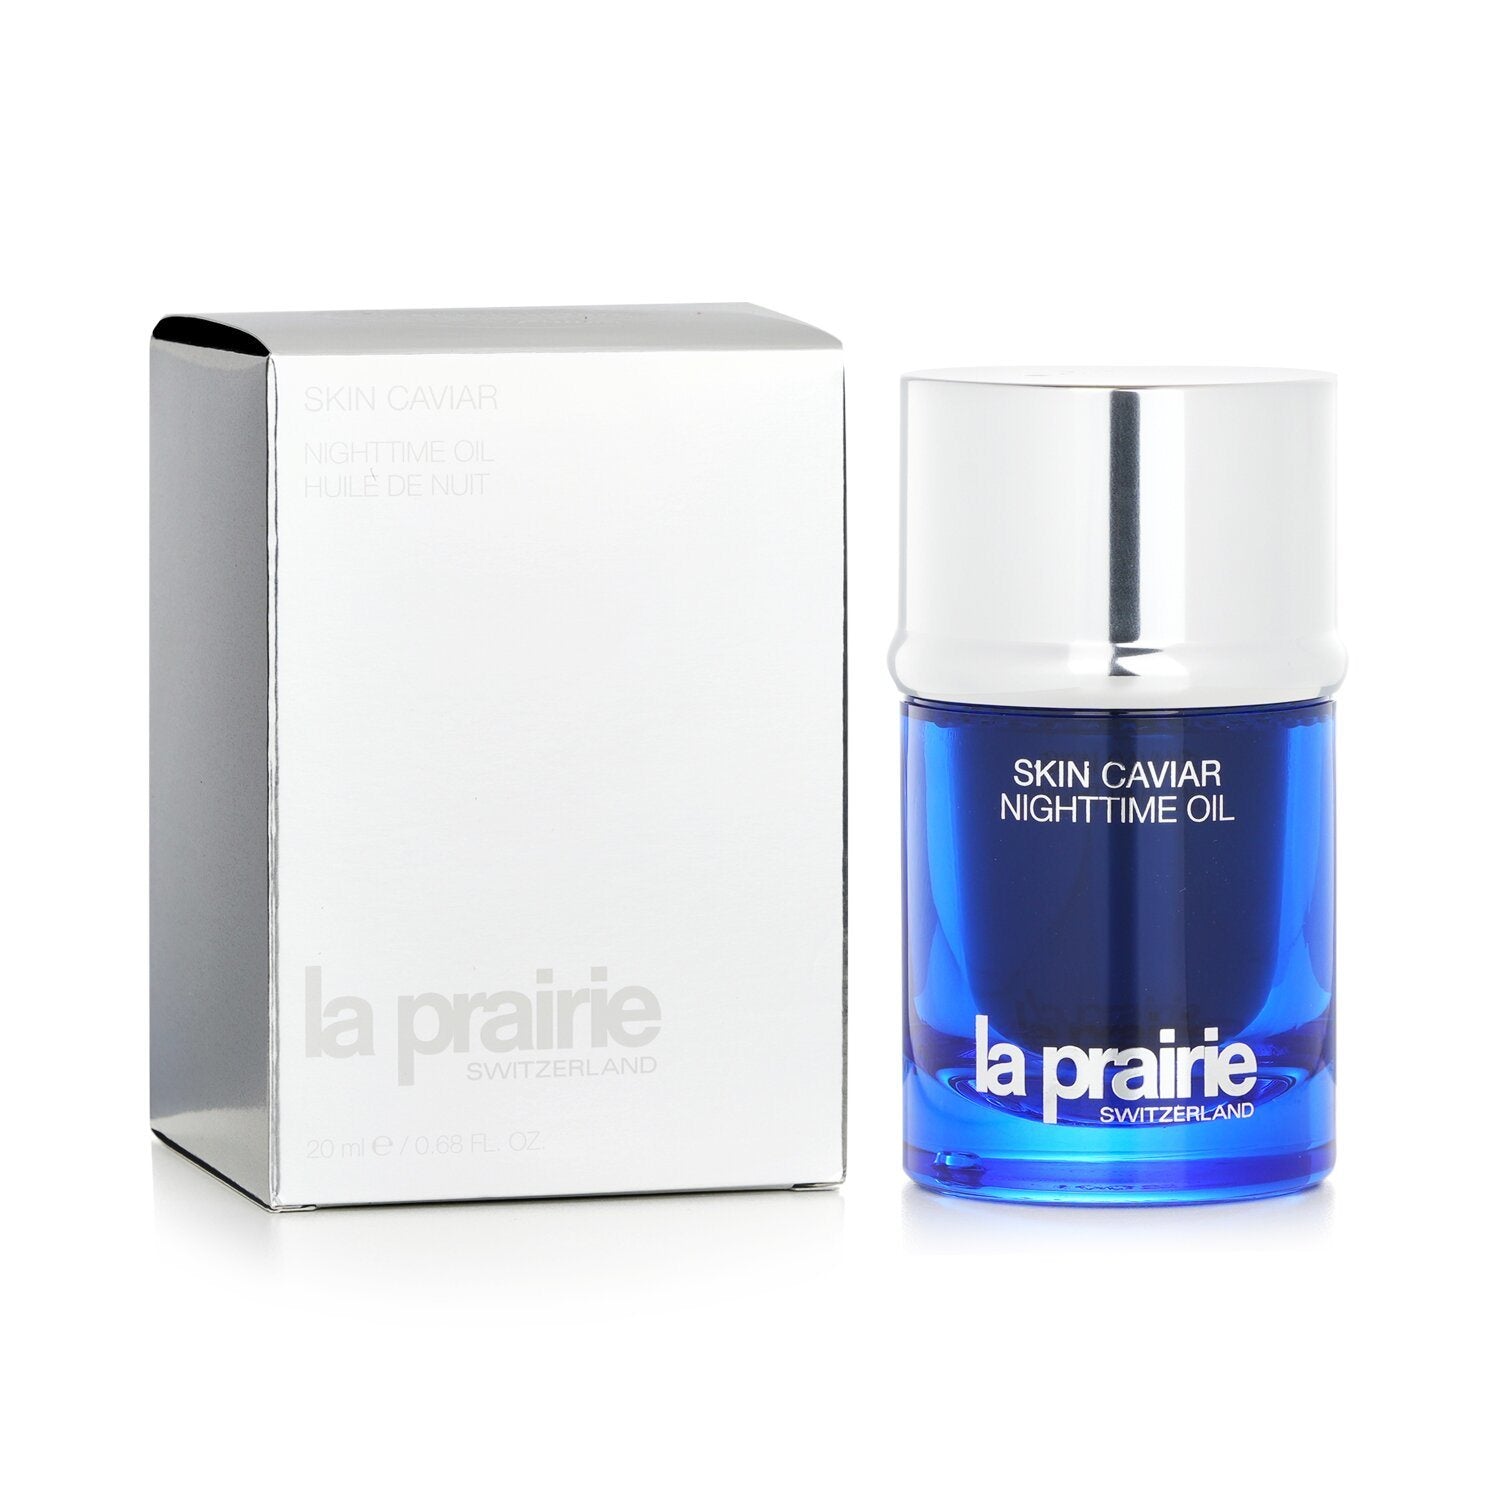 LA PRAIRIE - Skin Caviar Nighttime Oil - 20ml/0.68oz 3P's Inclusive Beauty